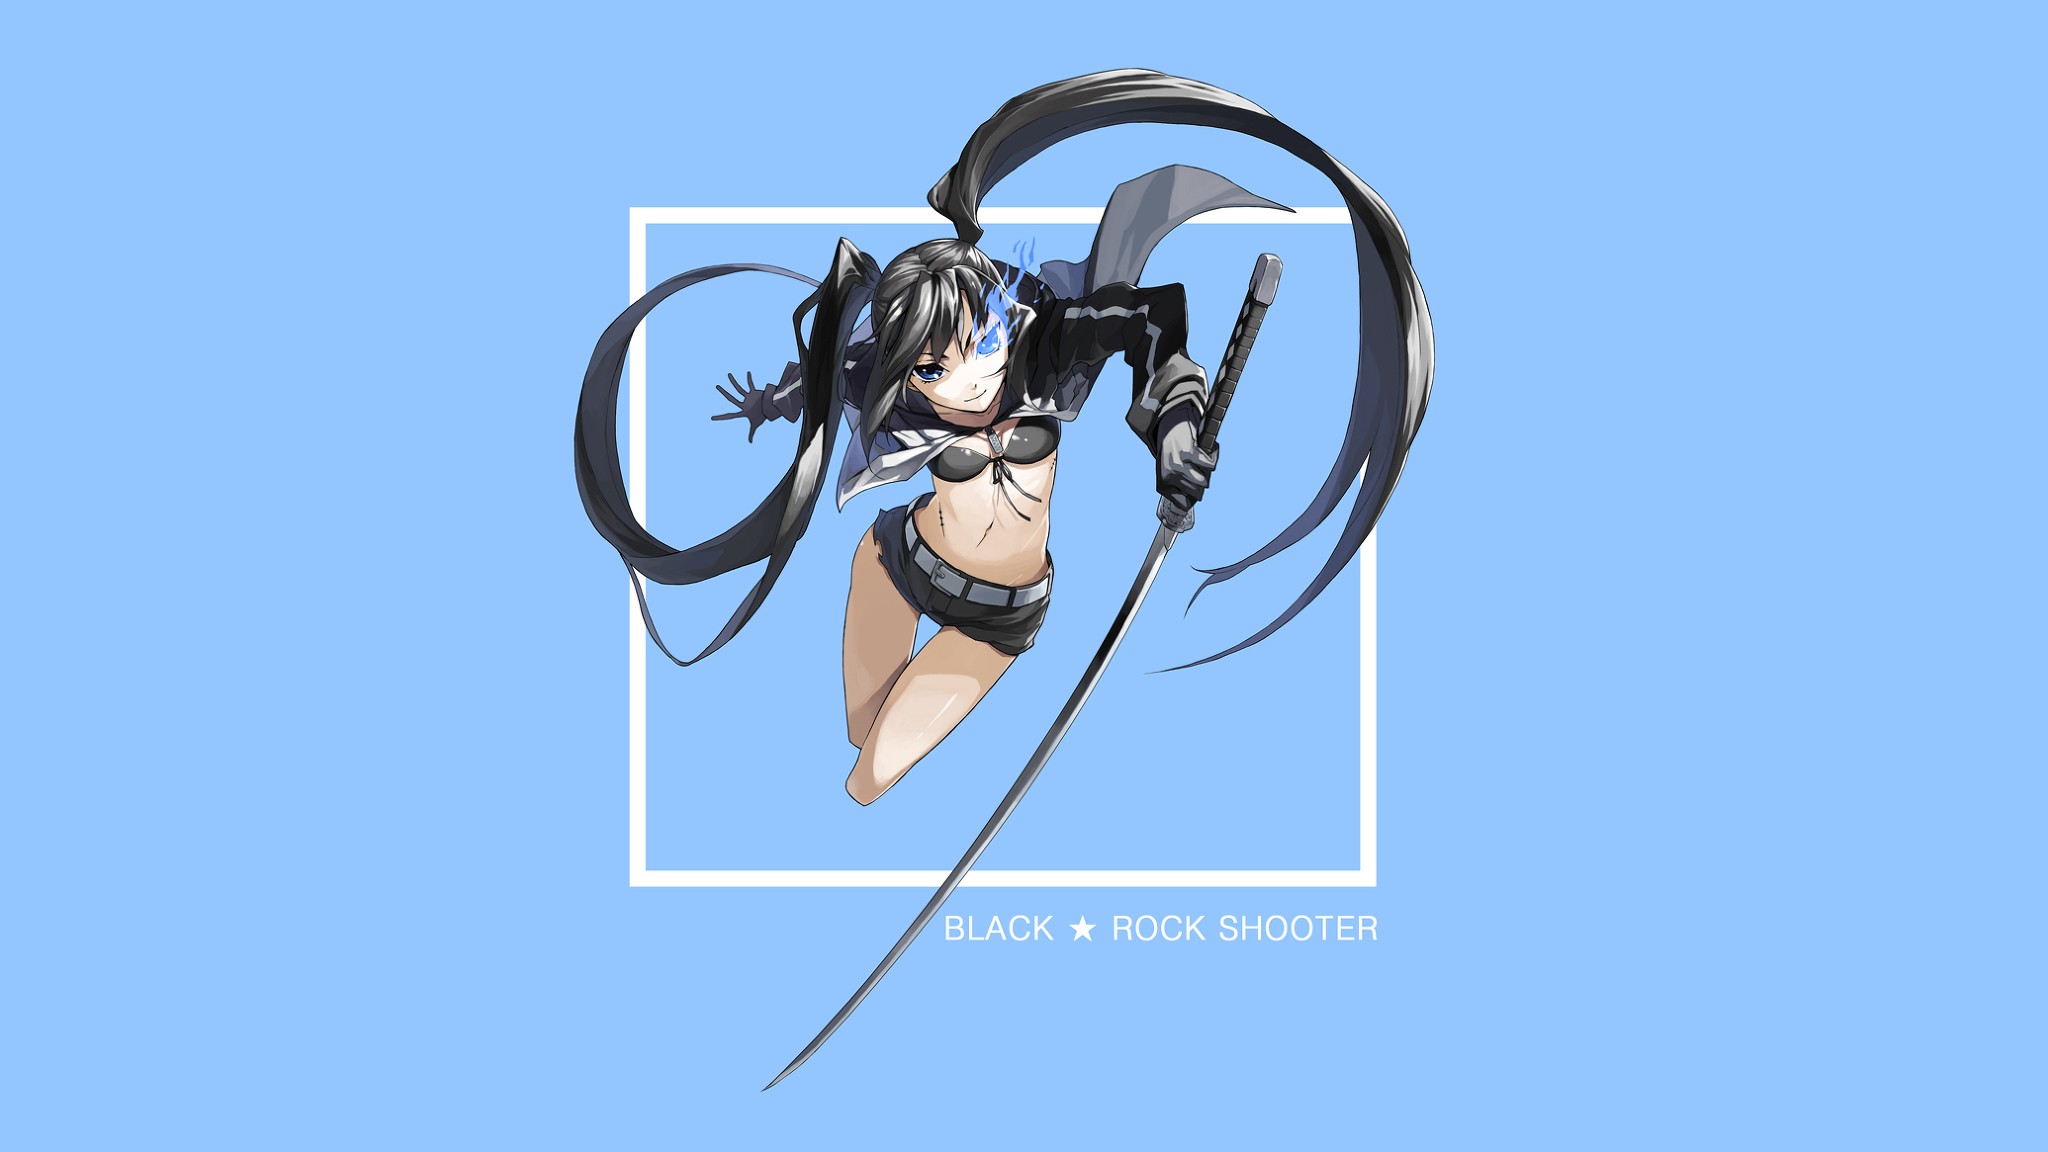 Anime 2048x1152 anime Black Rock Shooter anime girls blue background bra belly pants sword weapon women with swords dark hair long hair simple background